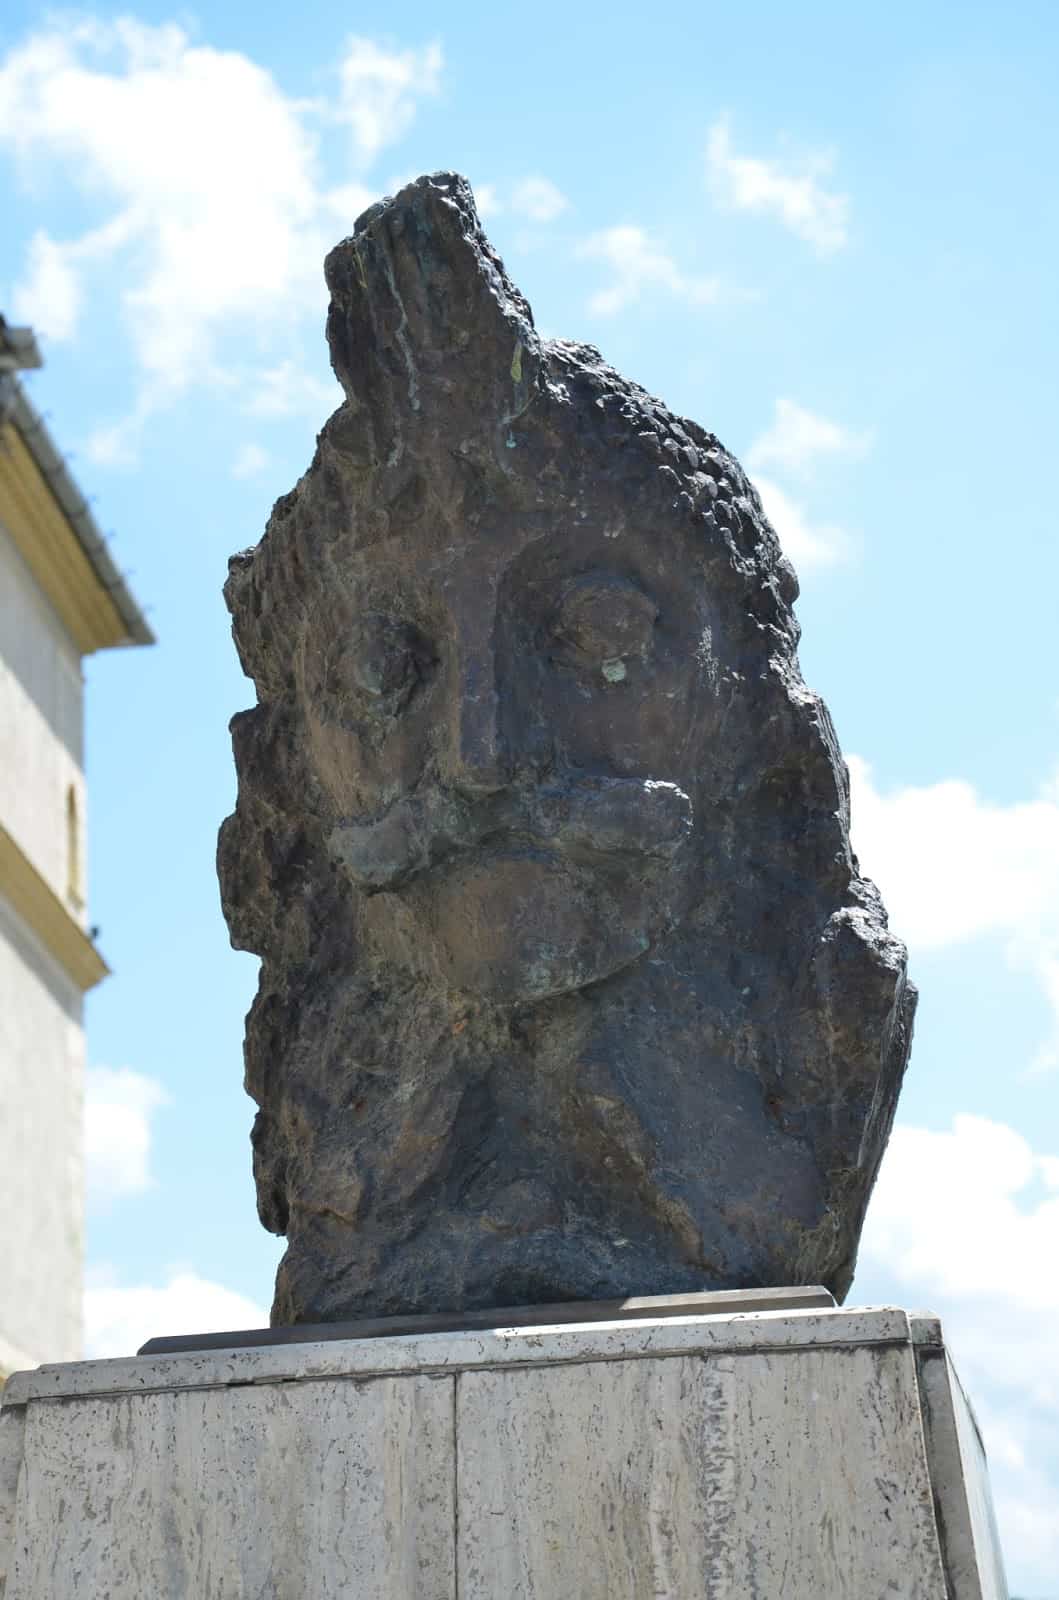 Bust of Vlad Țepeș in Sighişoara, Romania